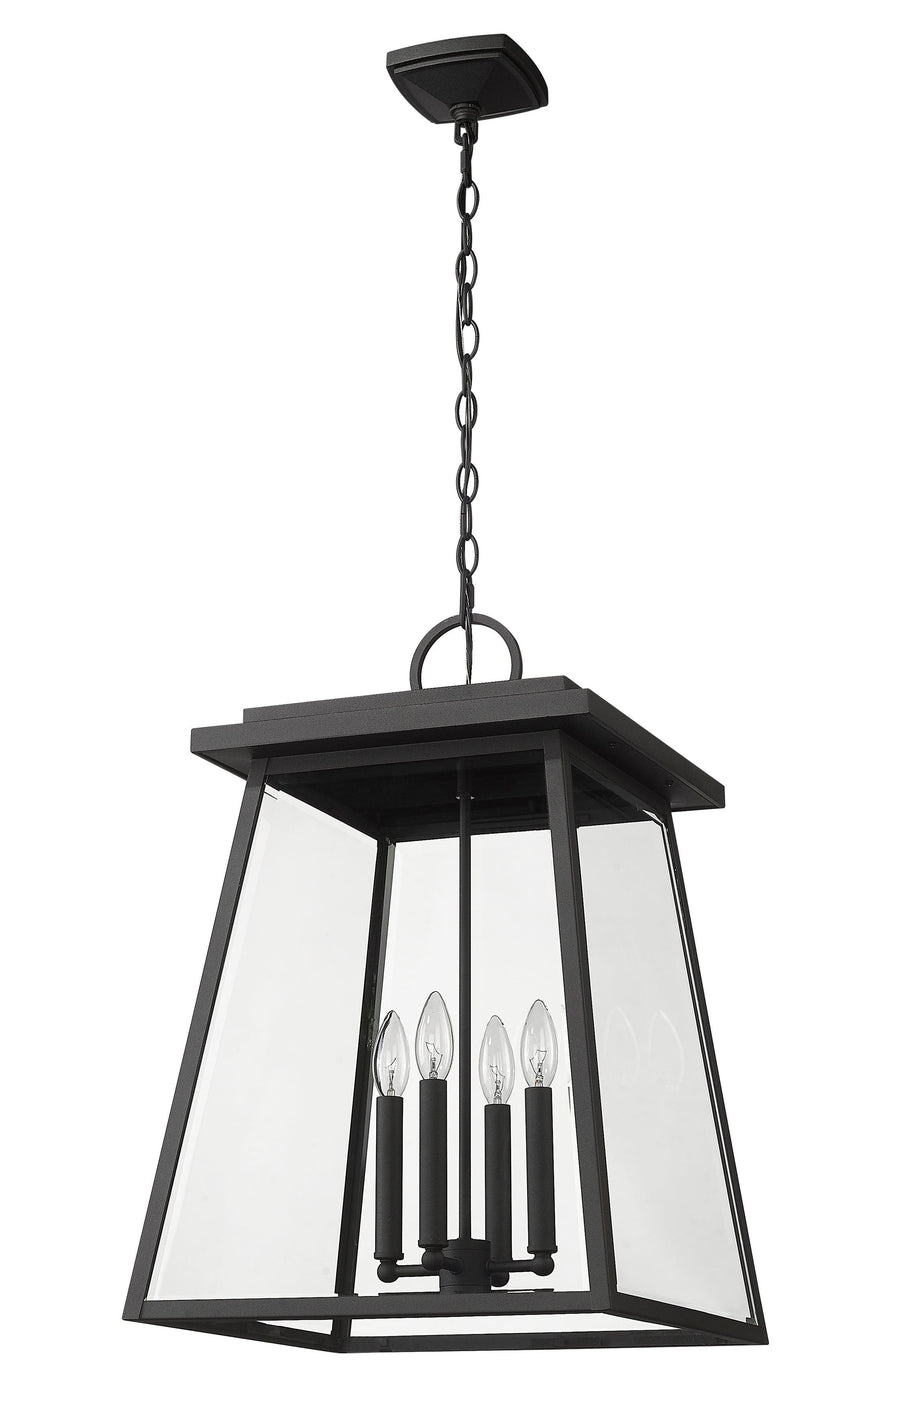 Broughton-4 Light Outdoor Chain Mount Ceiling Fixture XL - Maison Vogue